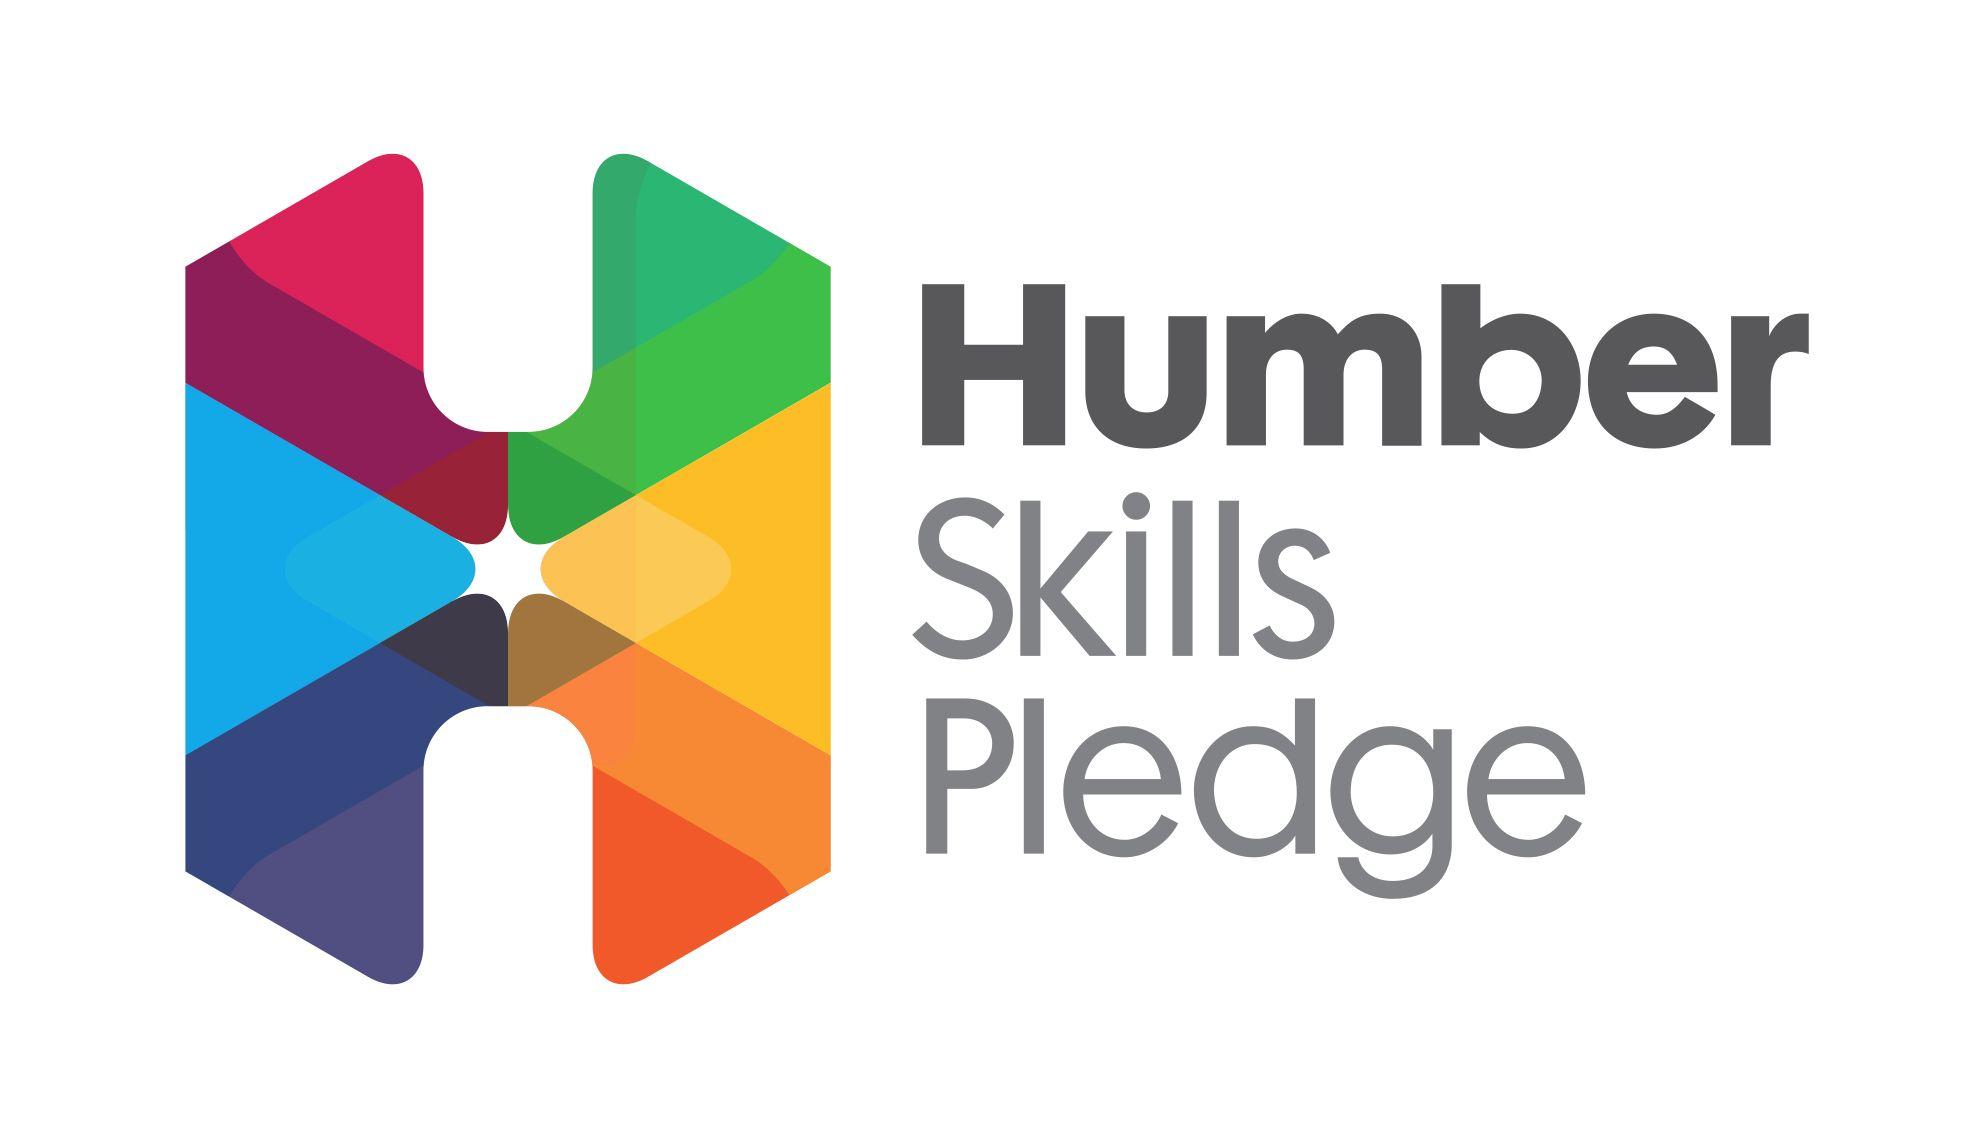 Pledge Logo - Skills Pledge » Humber LEP